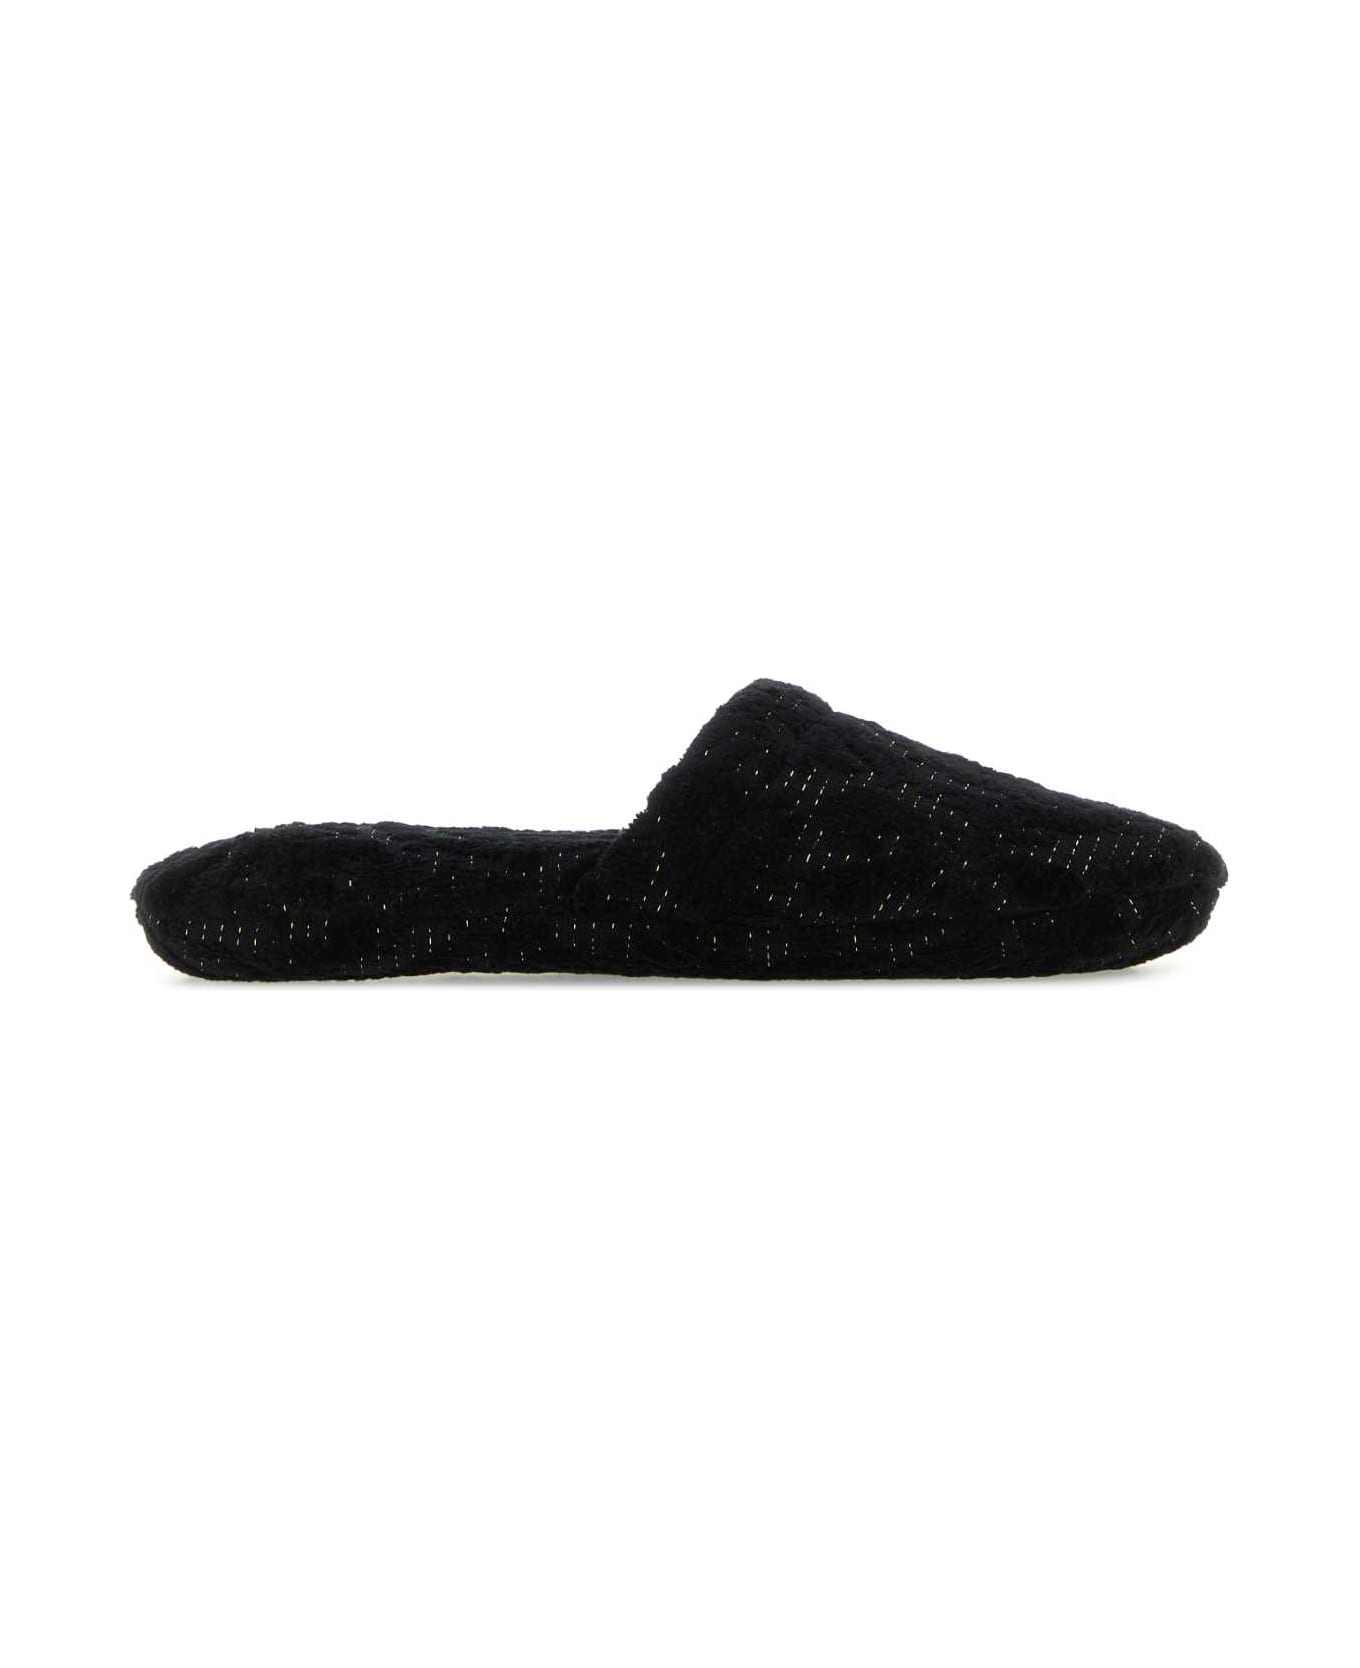 Versace Black Cotton Blend Slippers - ANTHRACITE フラットシューズ